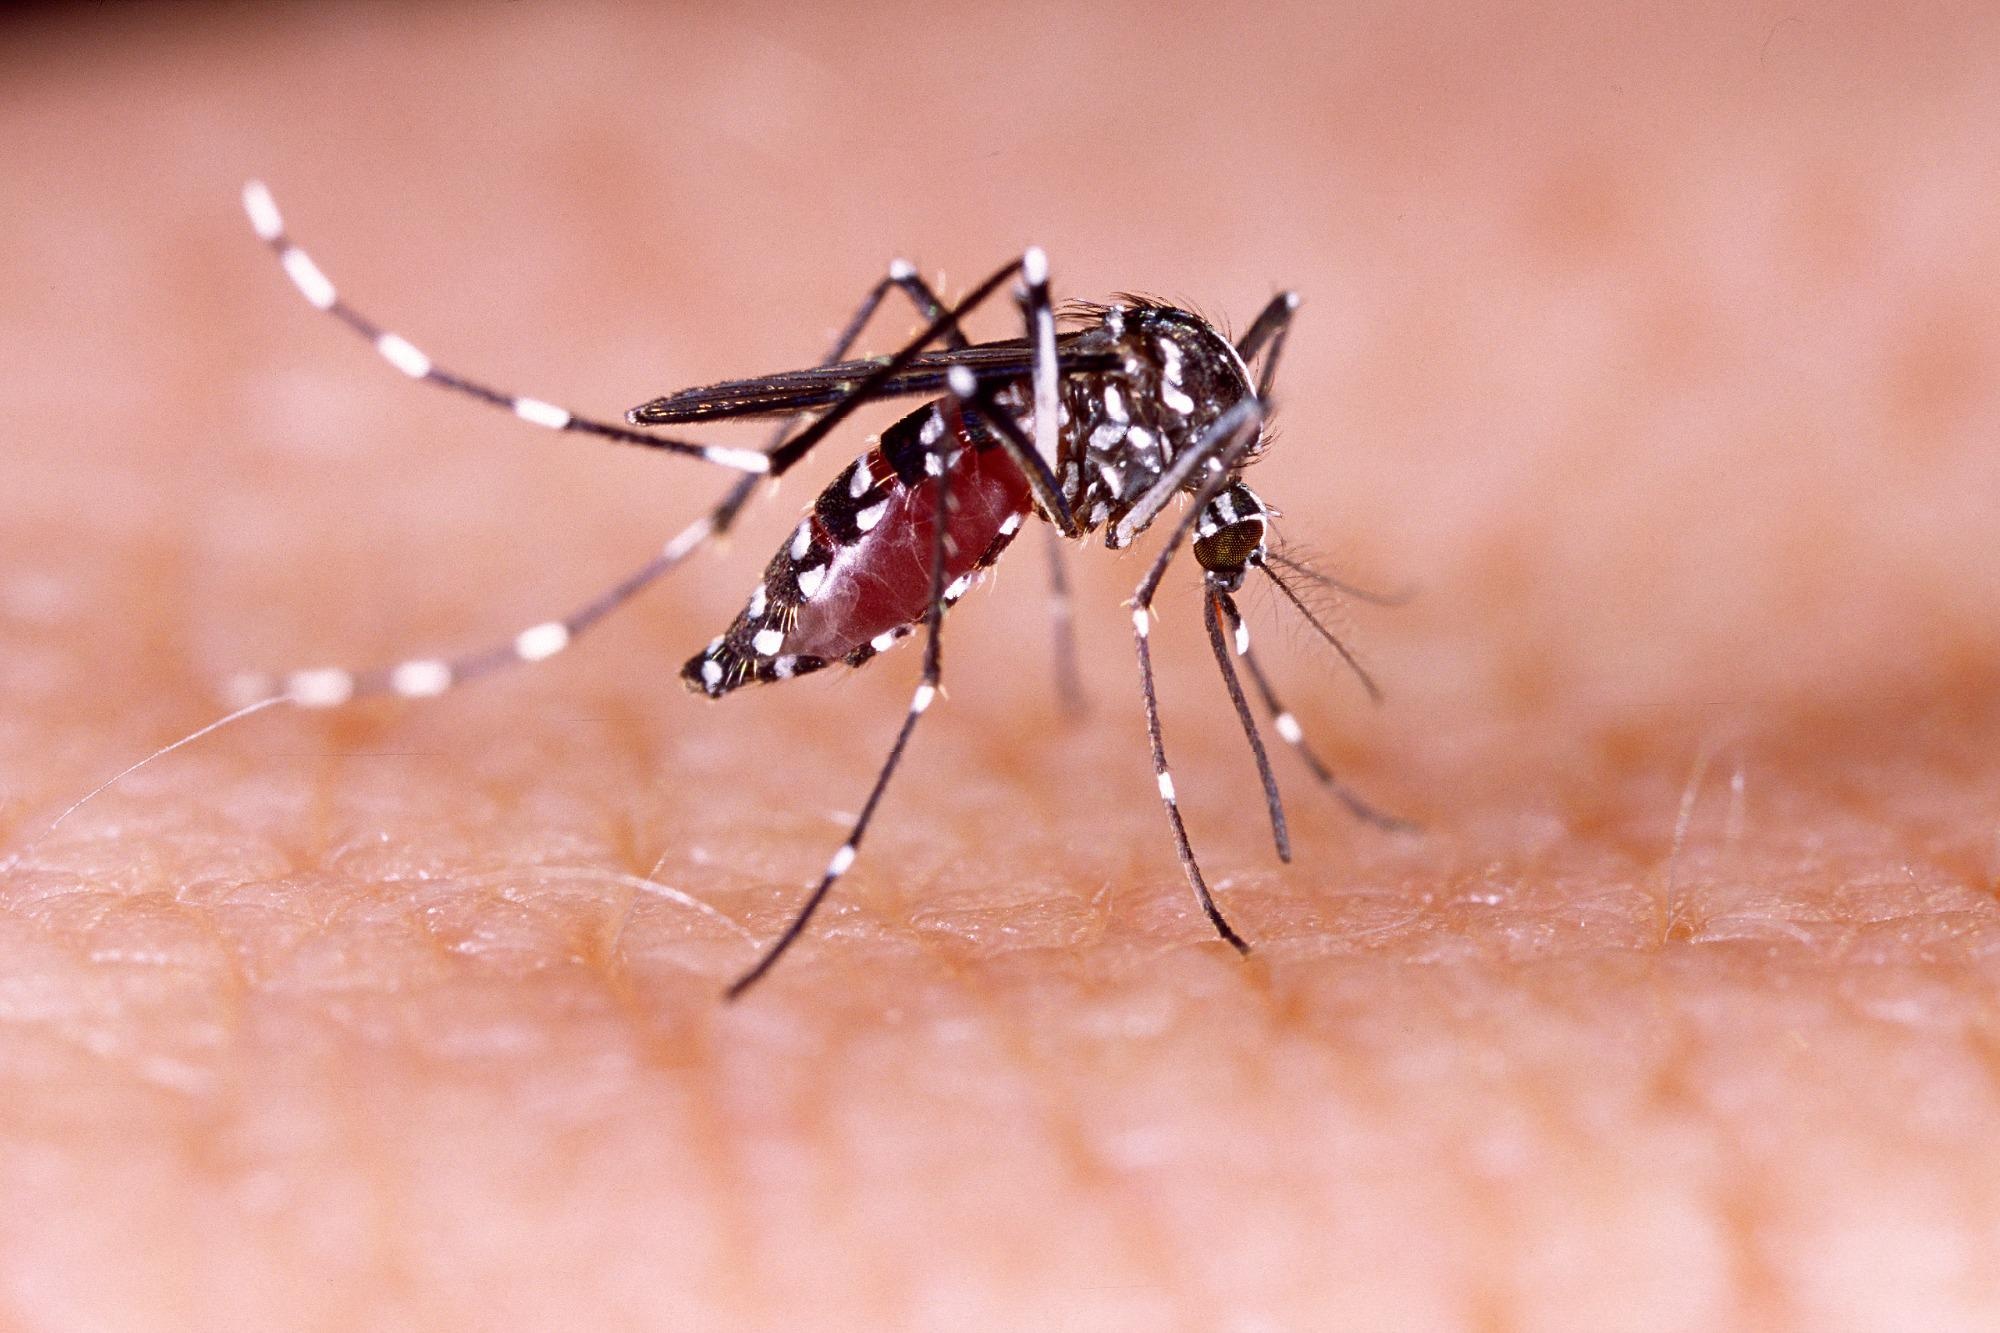 Aedes aegypti mosquito. Image Credit: Tacio Philip Sansonovski / Shutterstock